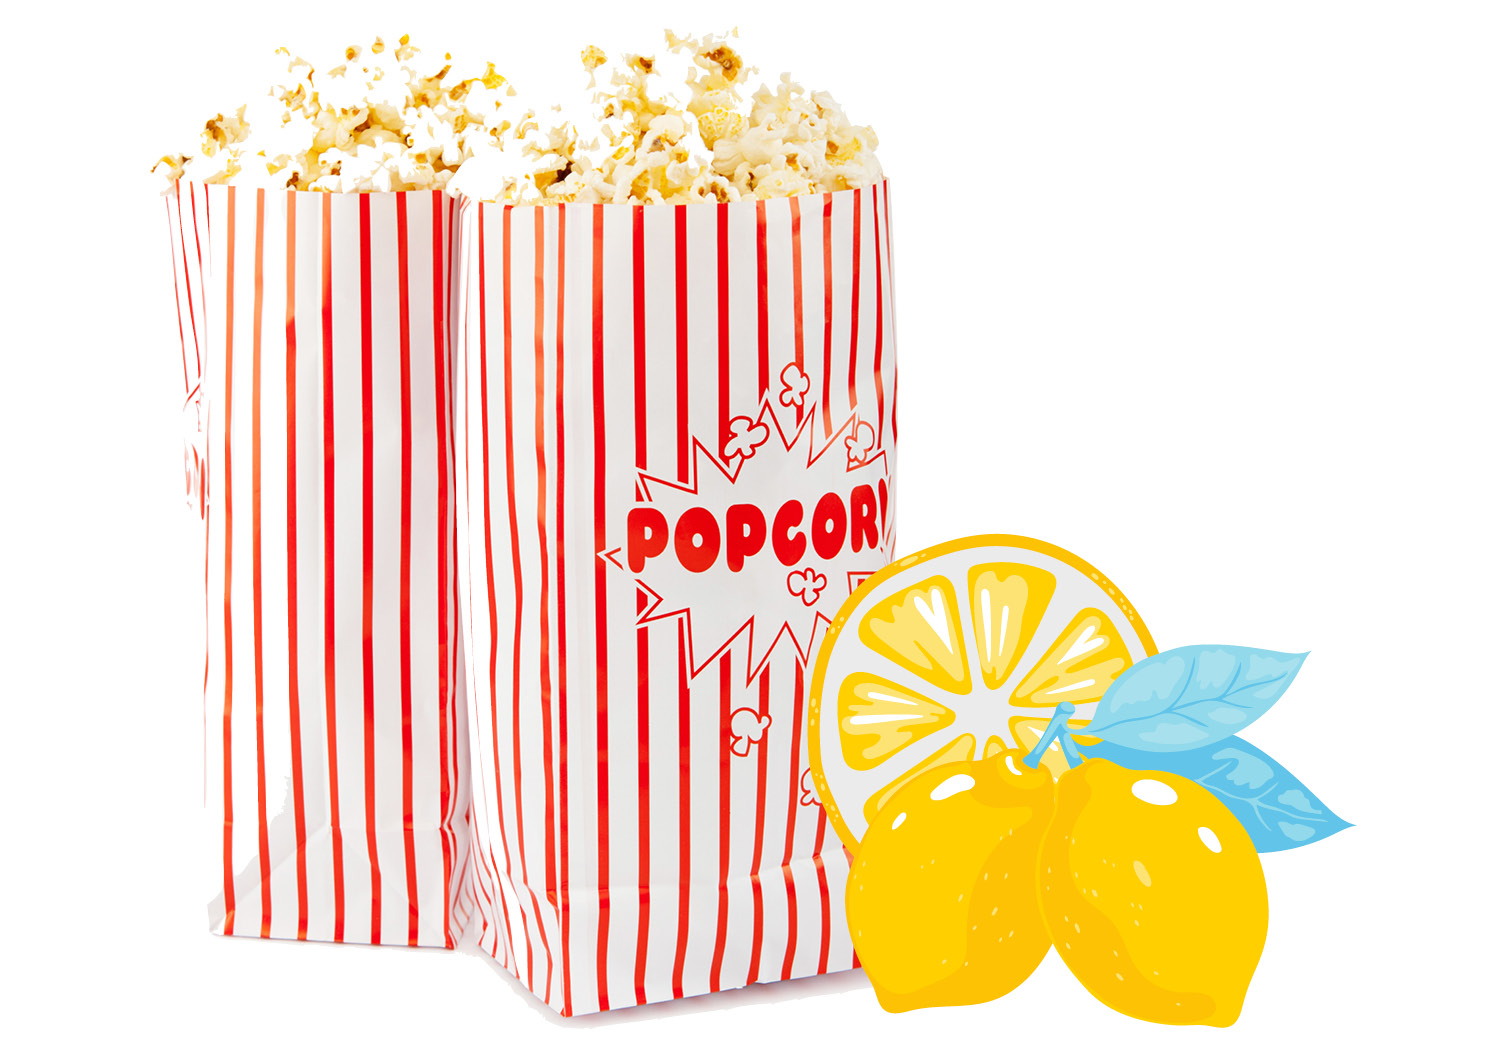 FREE Popcorn & Lemonade!